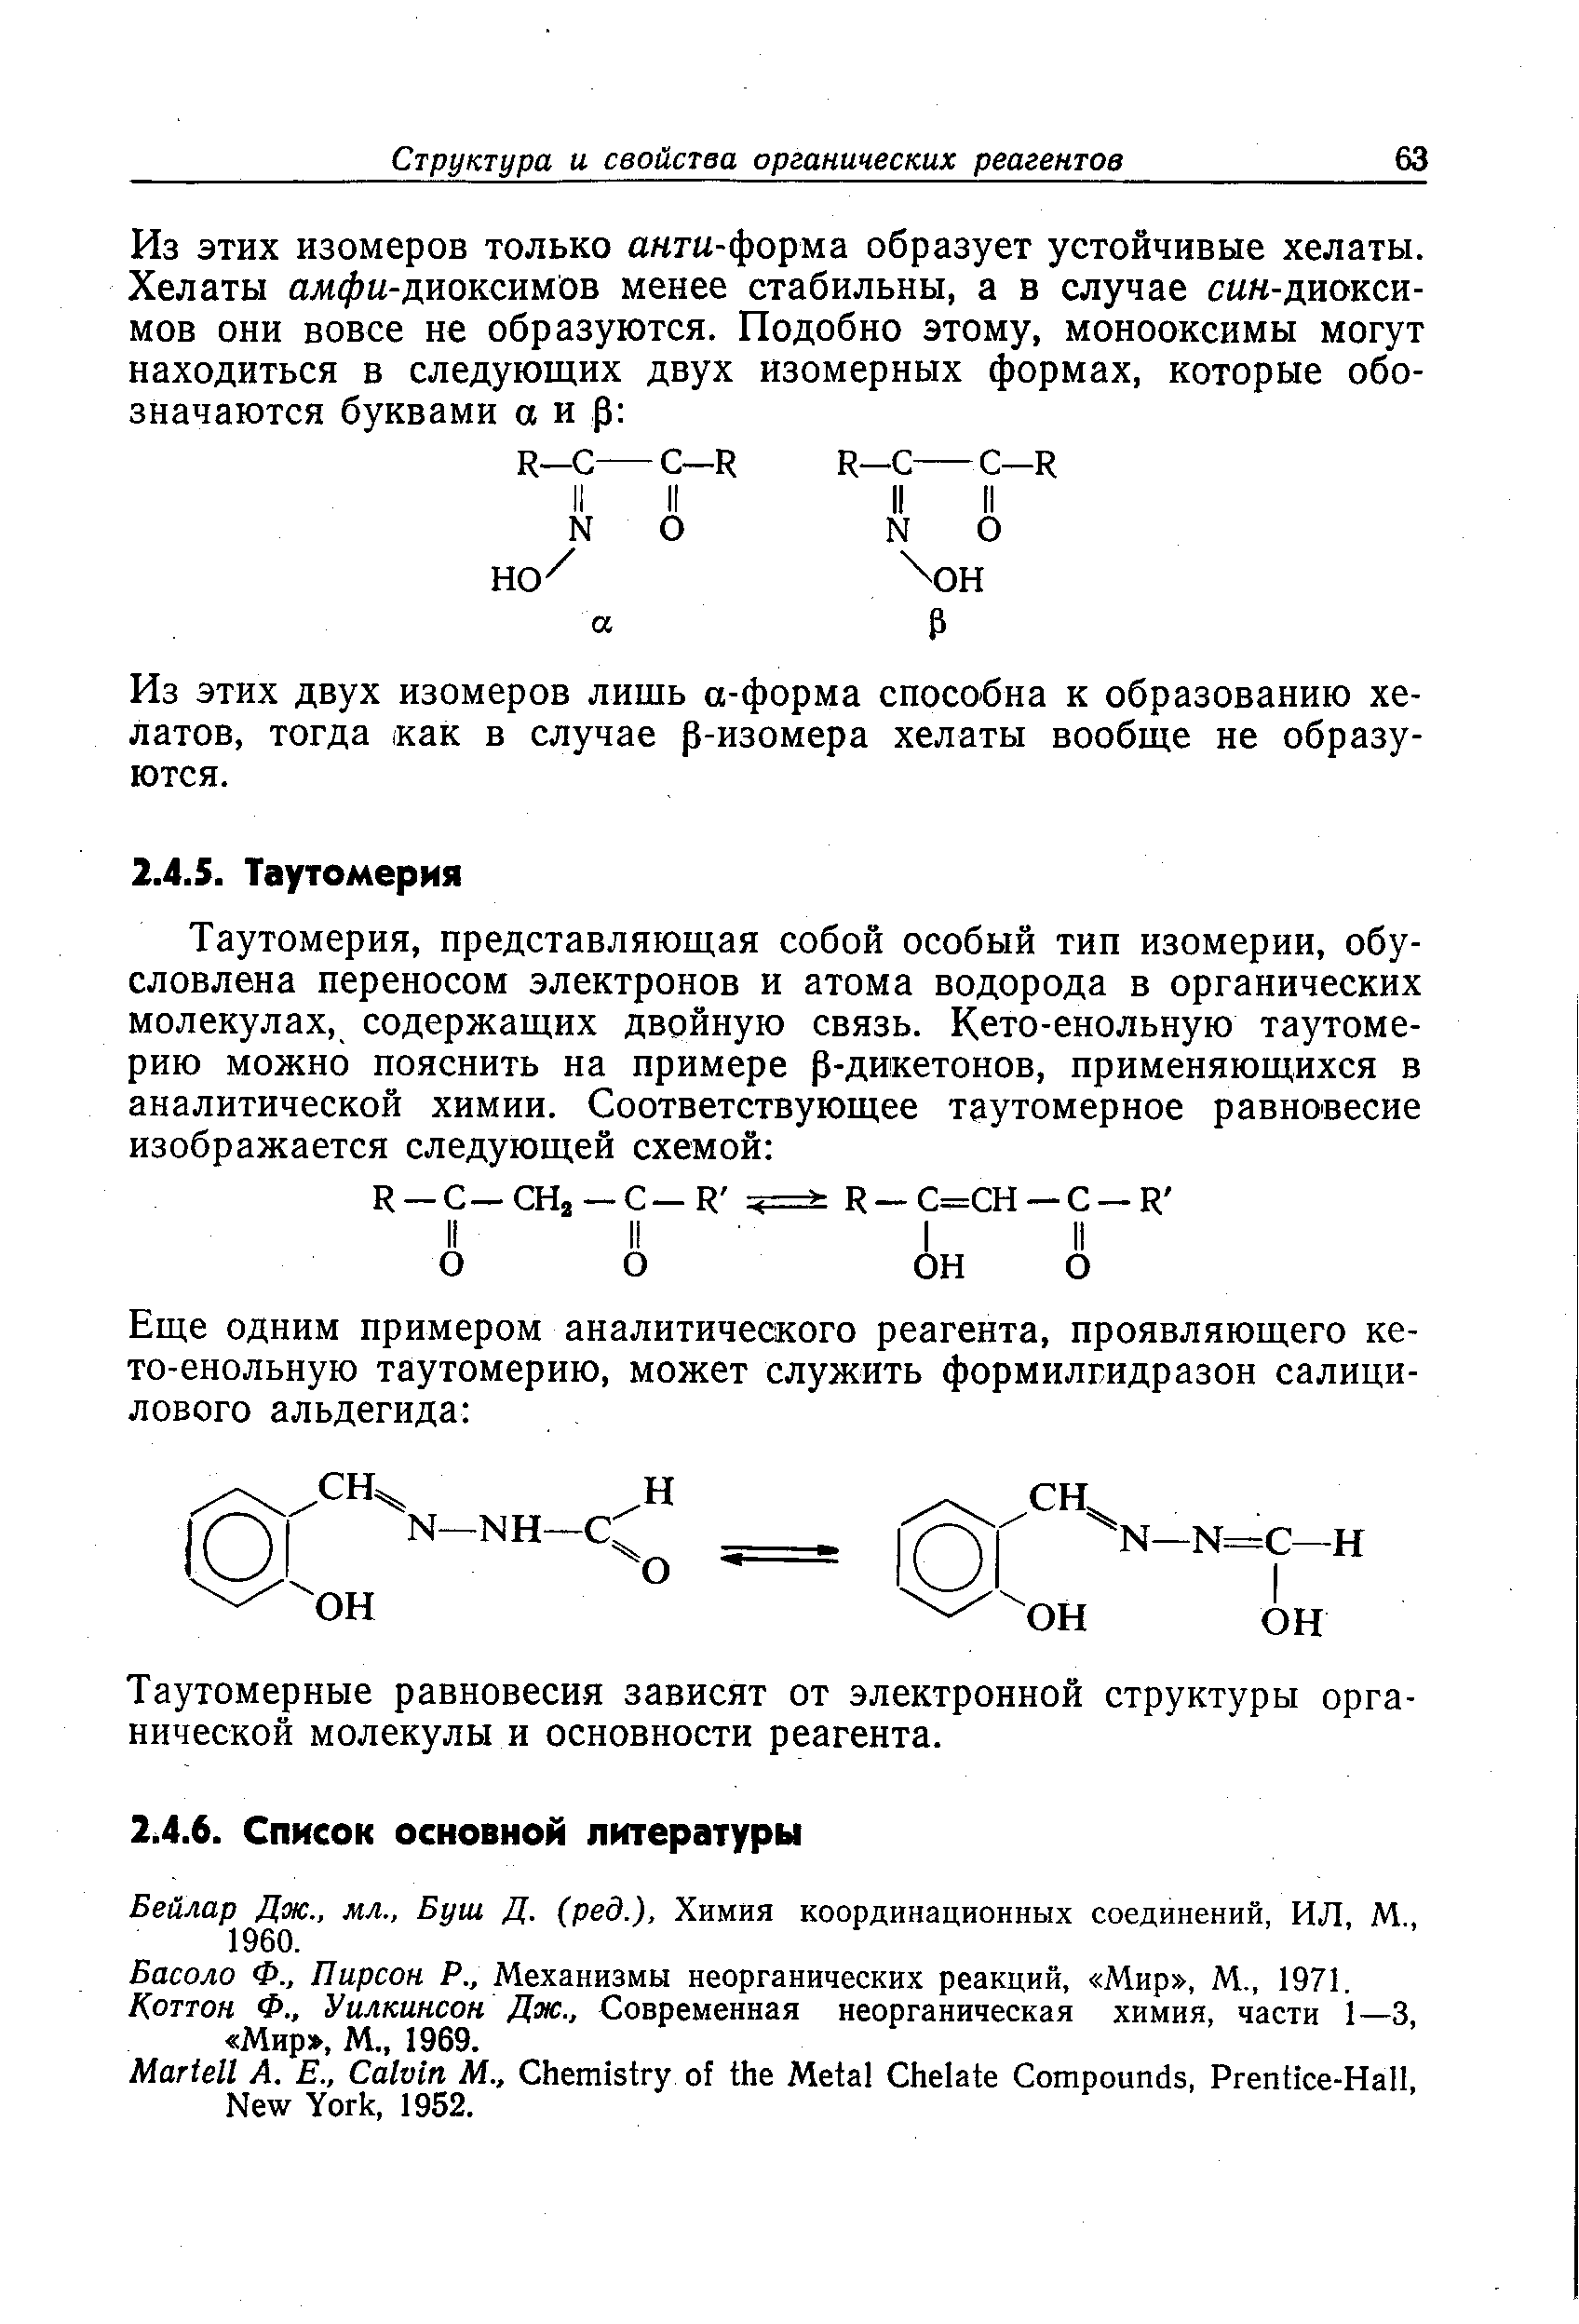 Бейлар Дж., мл., Буш Д. (ред.). Химия координационных соединений, ИЛ, М., 1960.